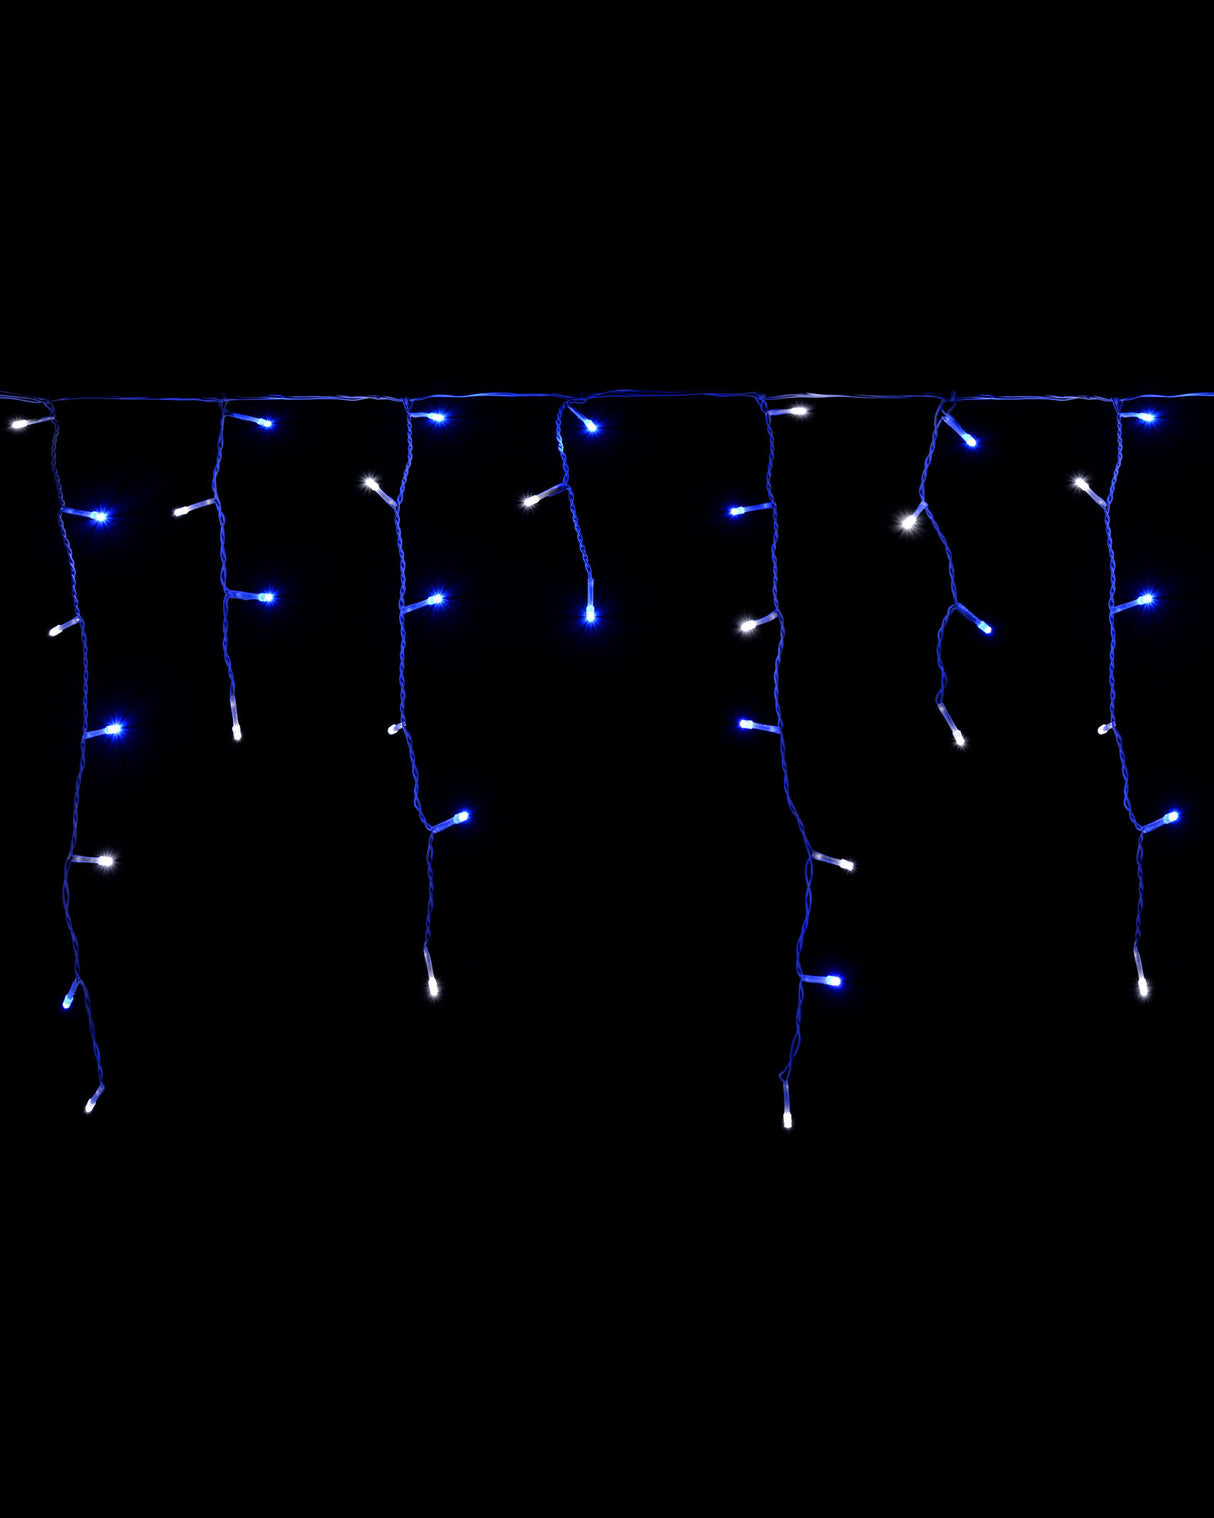 360 Icicle LED Light String, Blue/White, 8.8 m